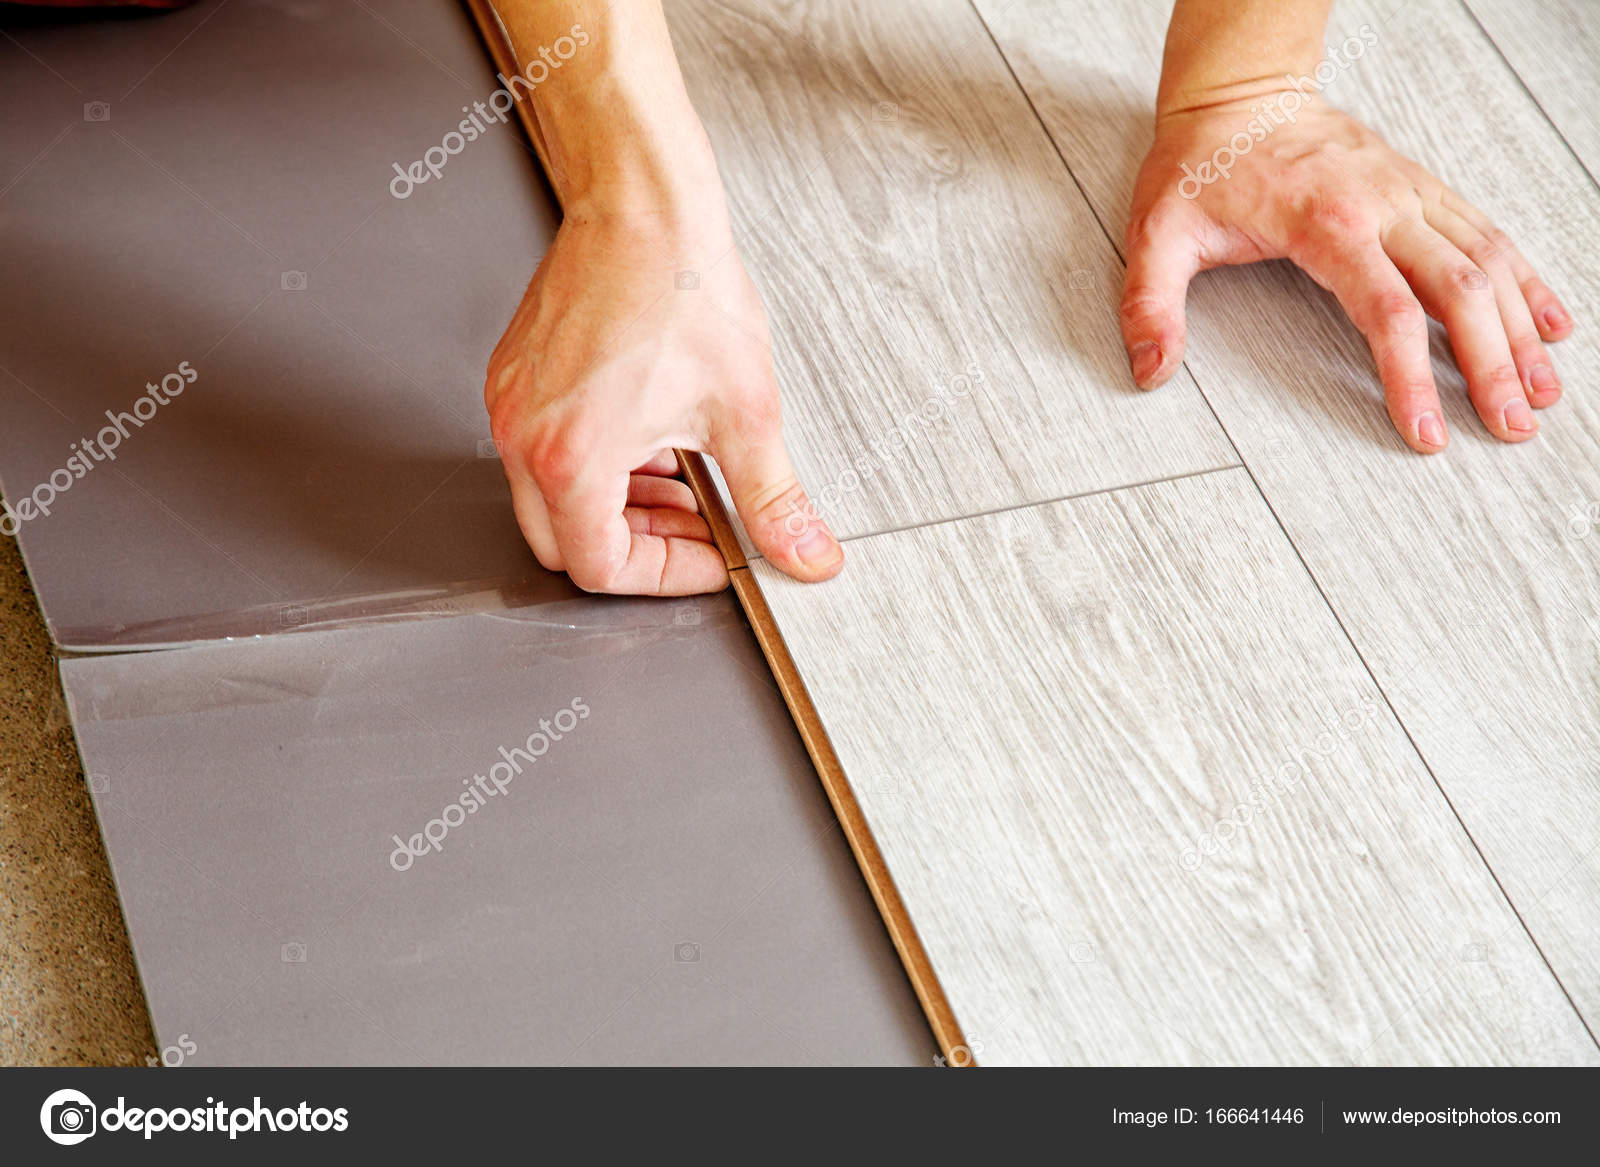 Handyman S Hands Laying Down Laminate Flooring Boards Stock